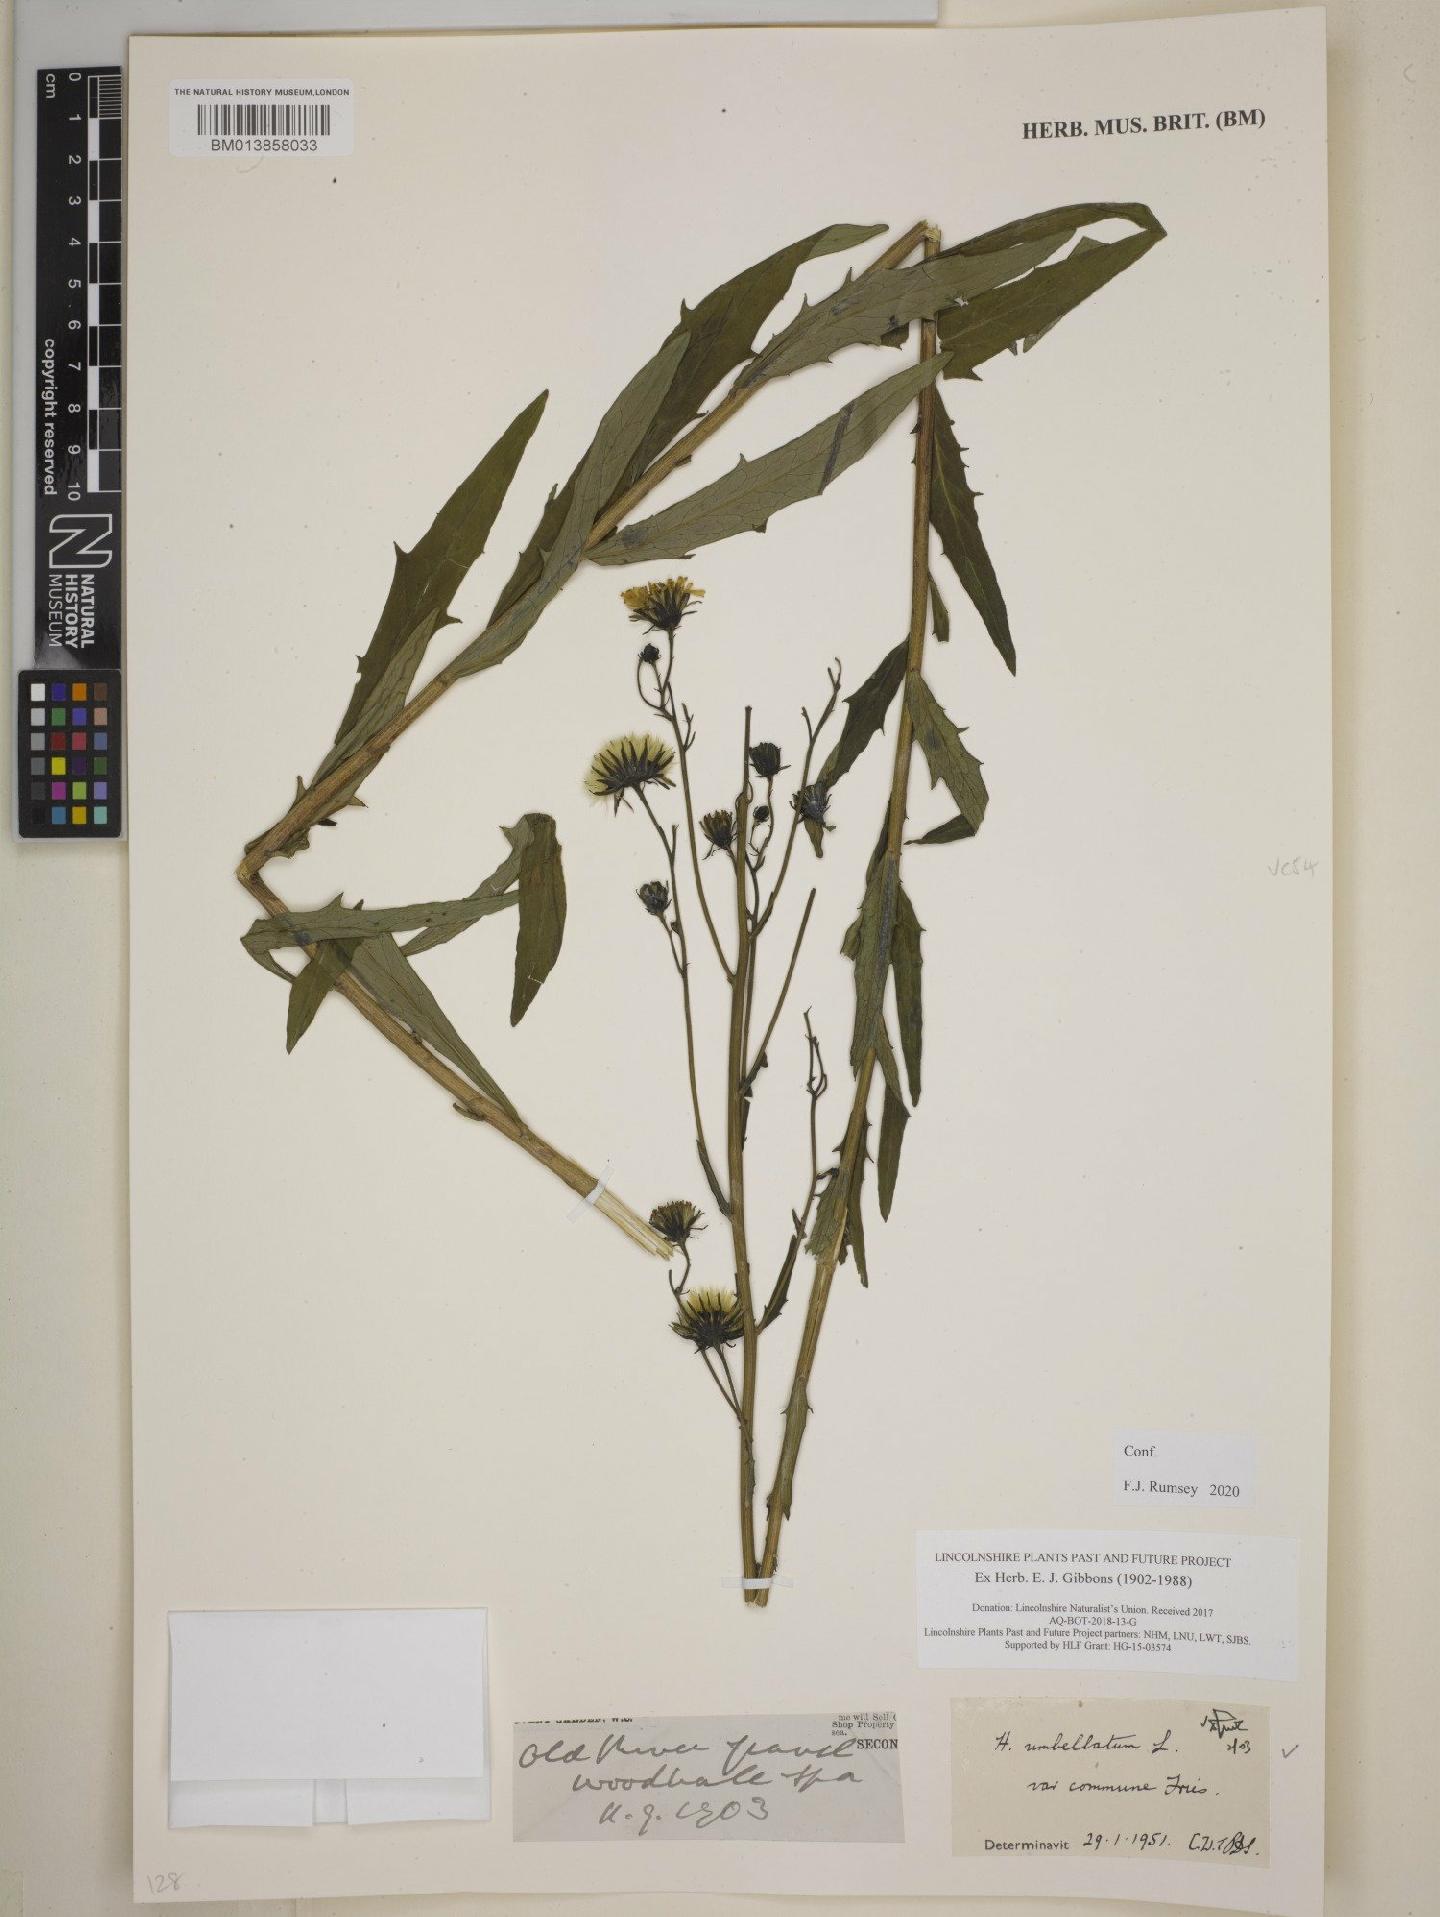 To NHMUK collection (Hieracium umbellatum var. commune Fries; NHMUK:ecatalogue:9131647)